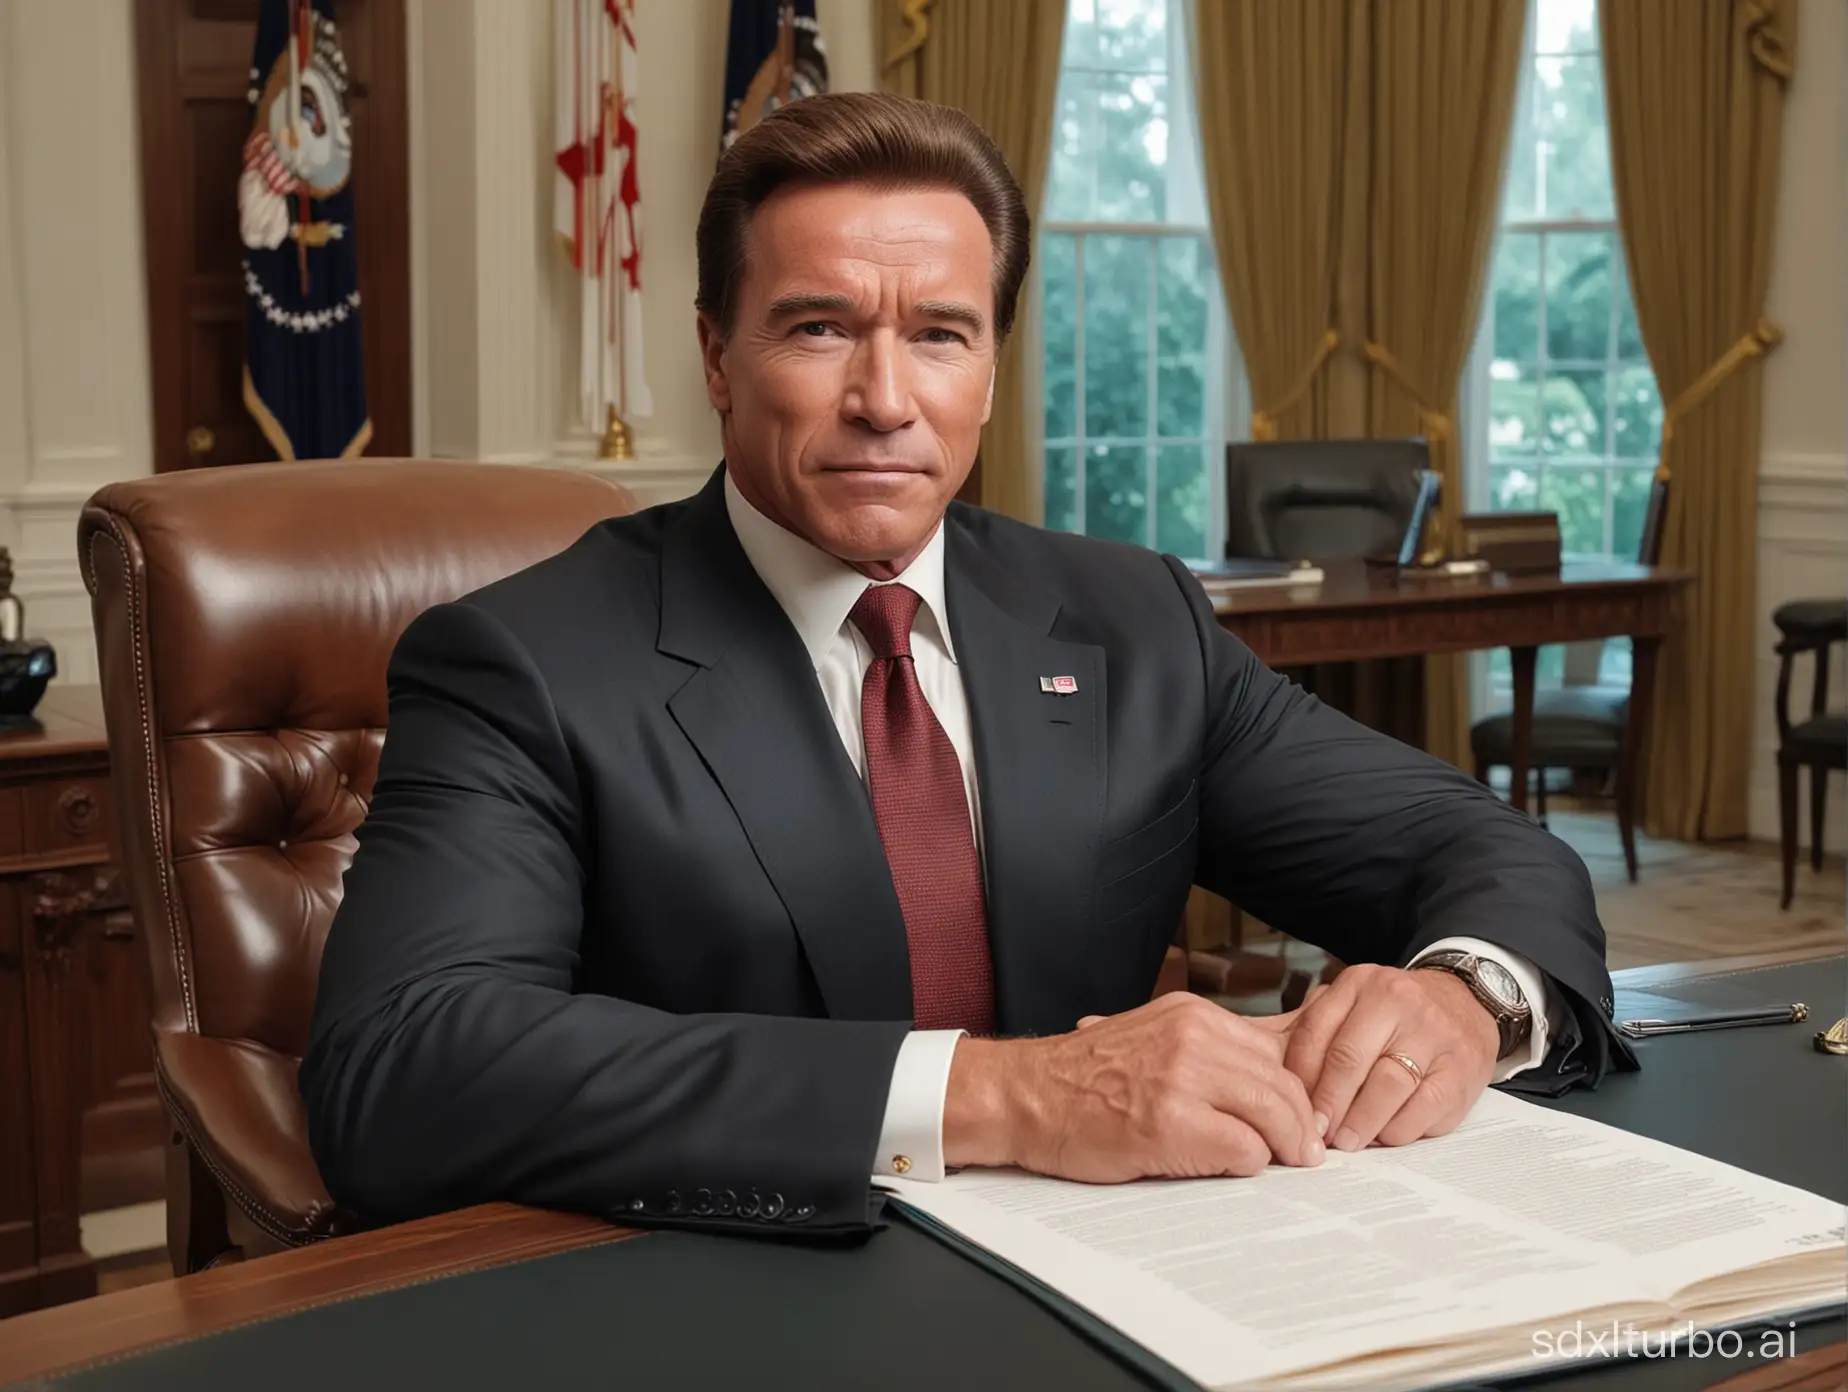 Arnold-Schwarzenegger-as-President-in-the-Oval-Office